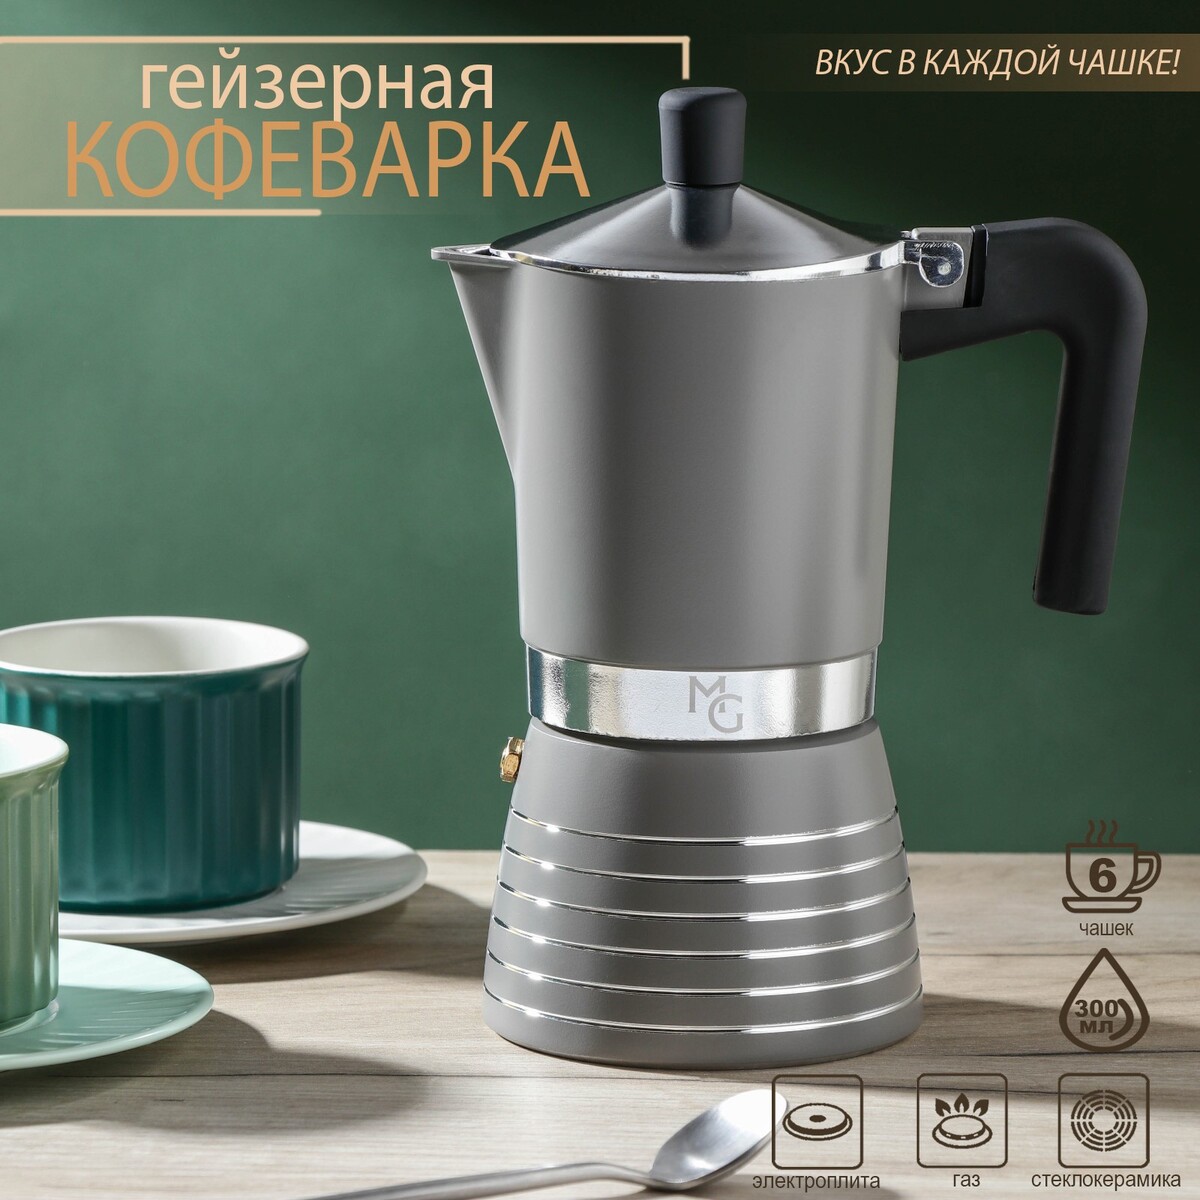 Кофеварка гейзерная magistro moka, на 6 чашек, 300 мл кофеварка гейзерная bialetti moka express nera 6 порций 4953